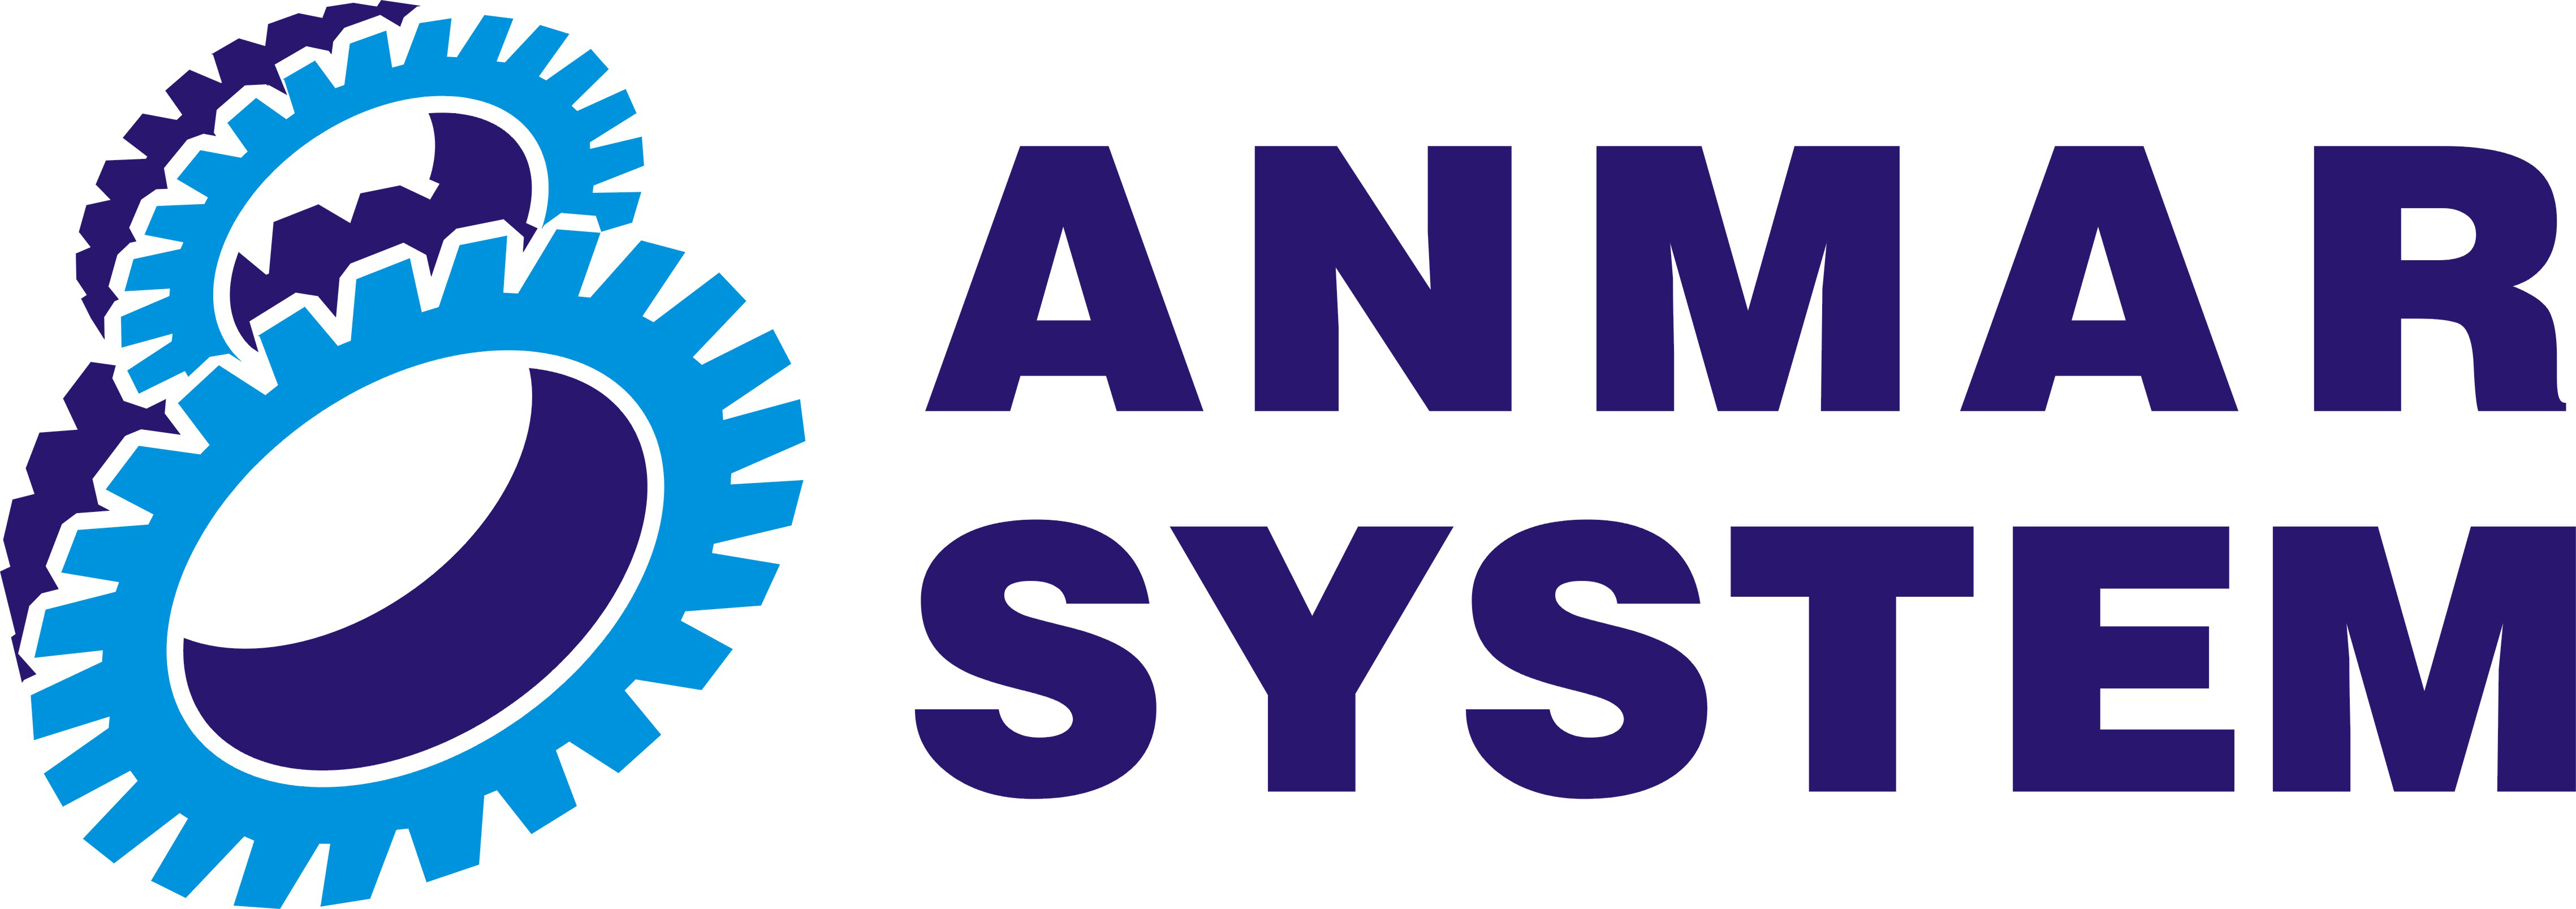 ANMAR SYSTEM